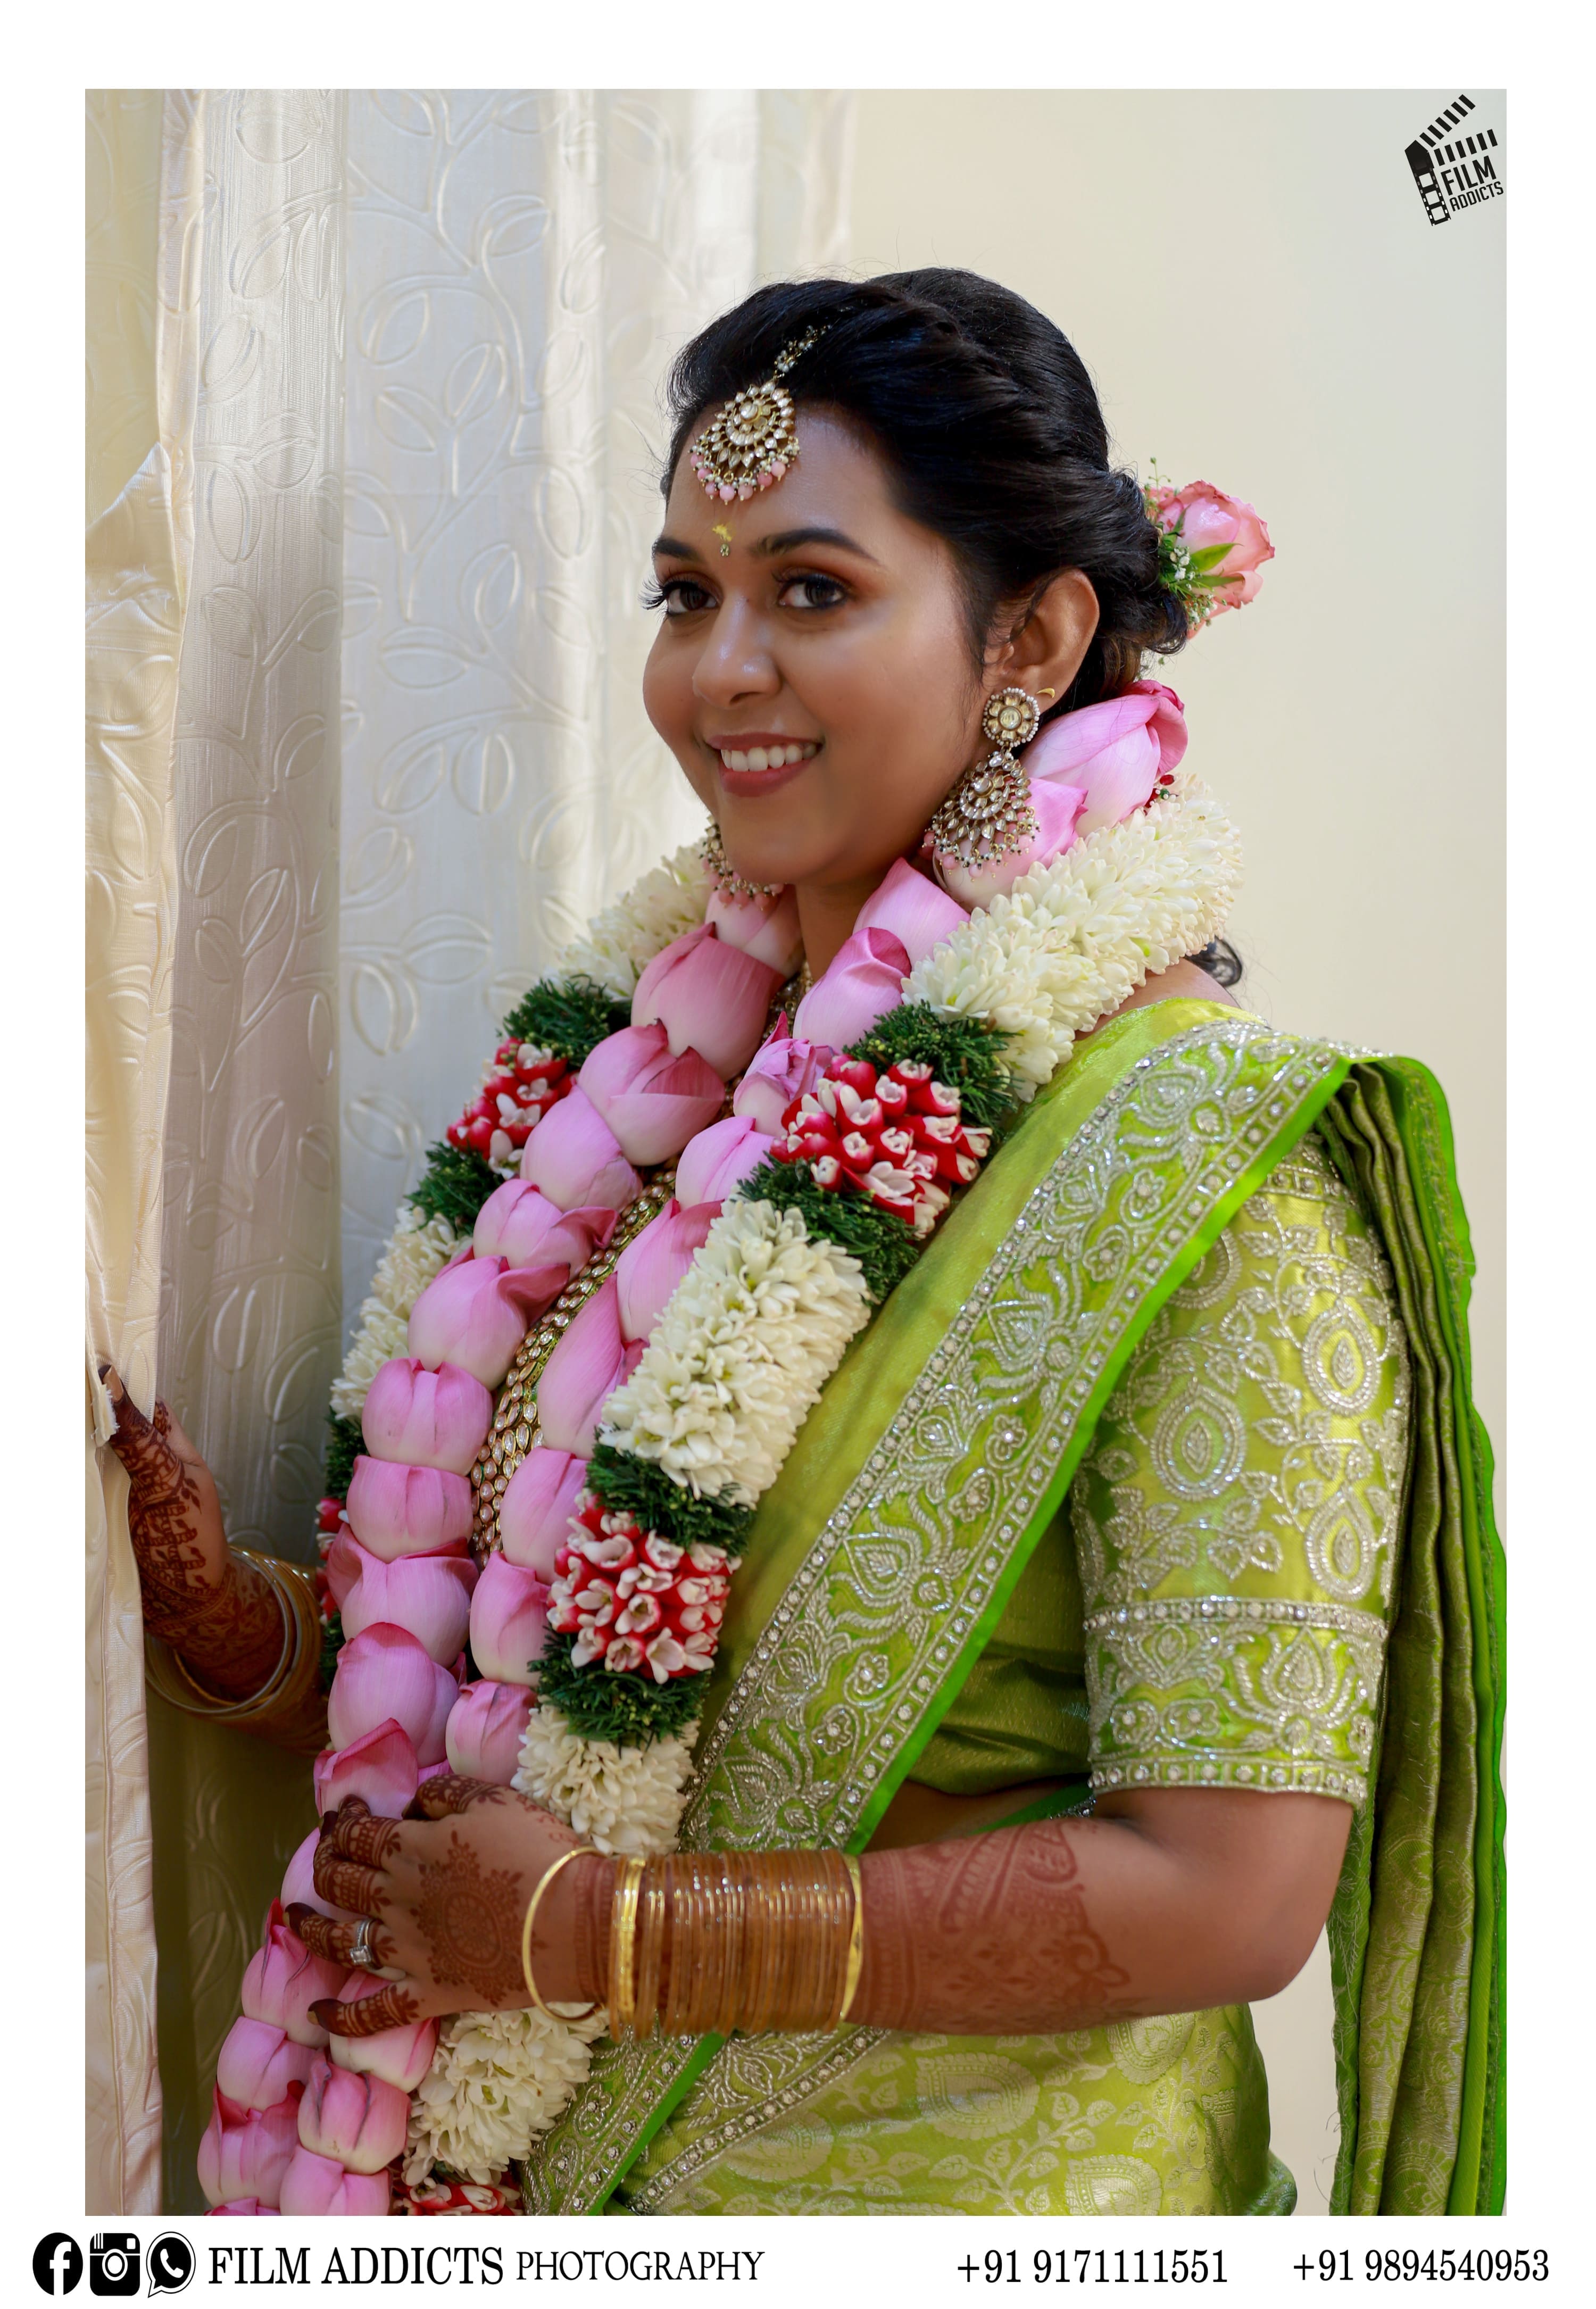 Tirunelveli Wedding Planners, Best Wedding Planners in Tirunelveli,Wedding Planners in Tirunelveli